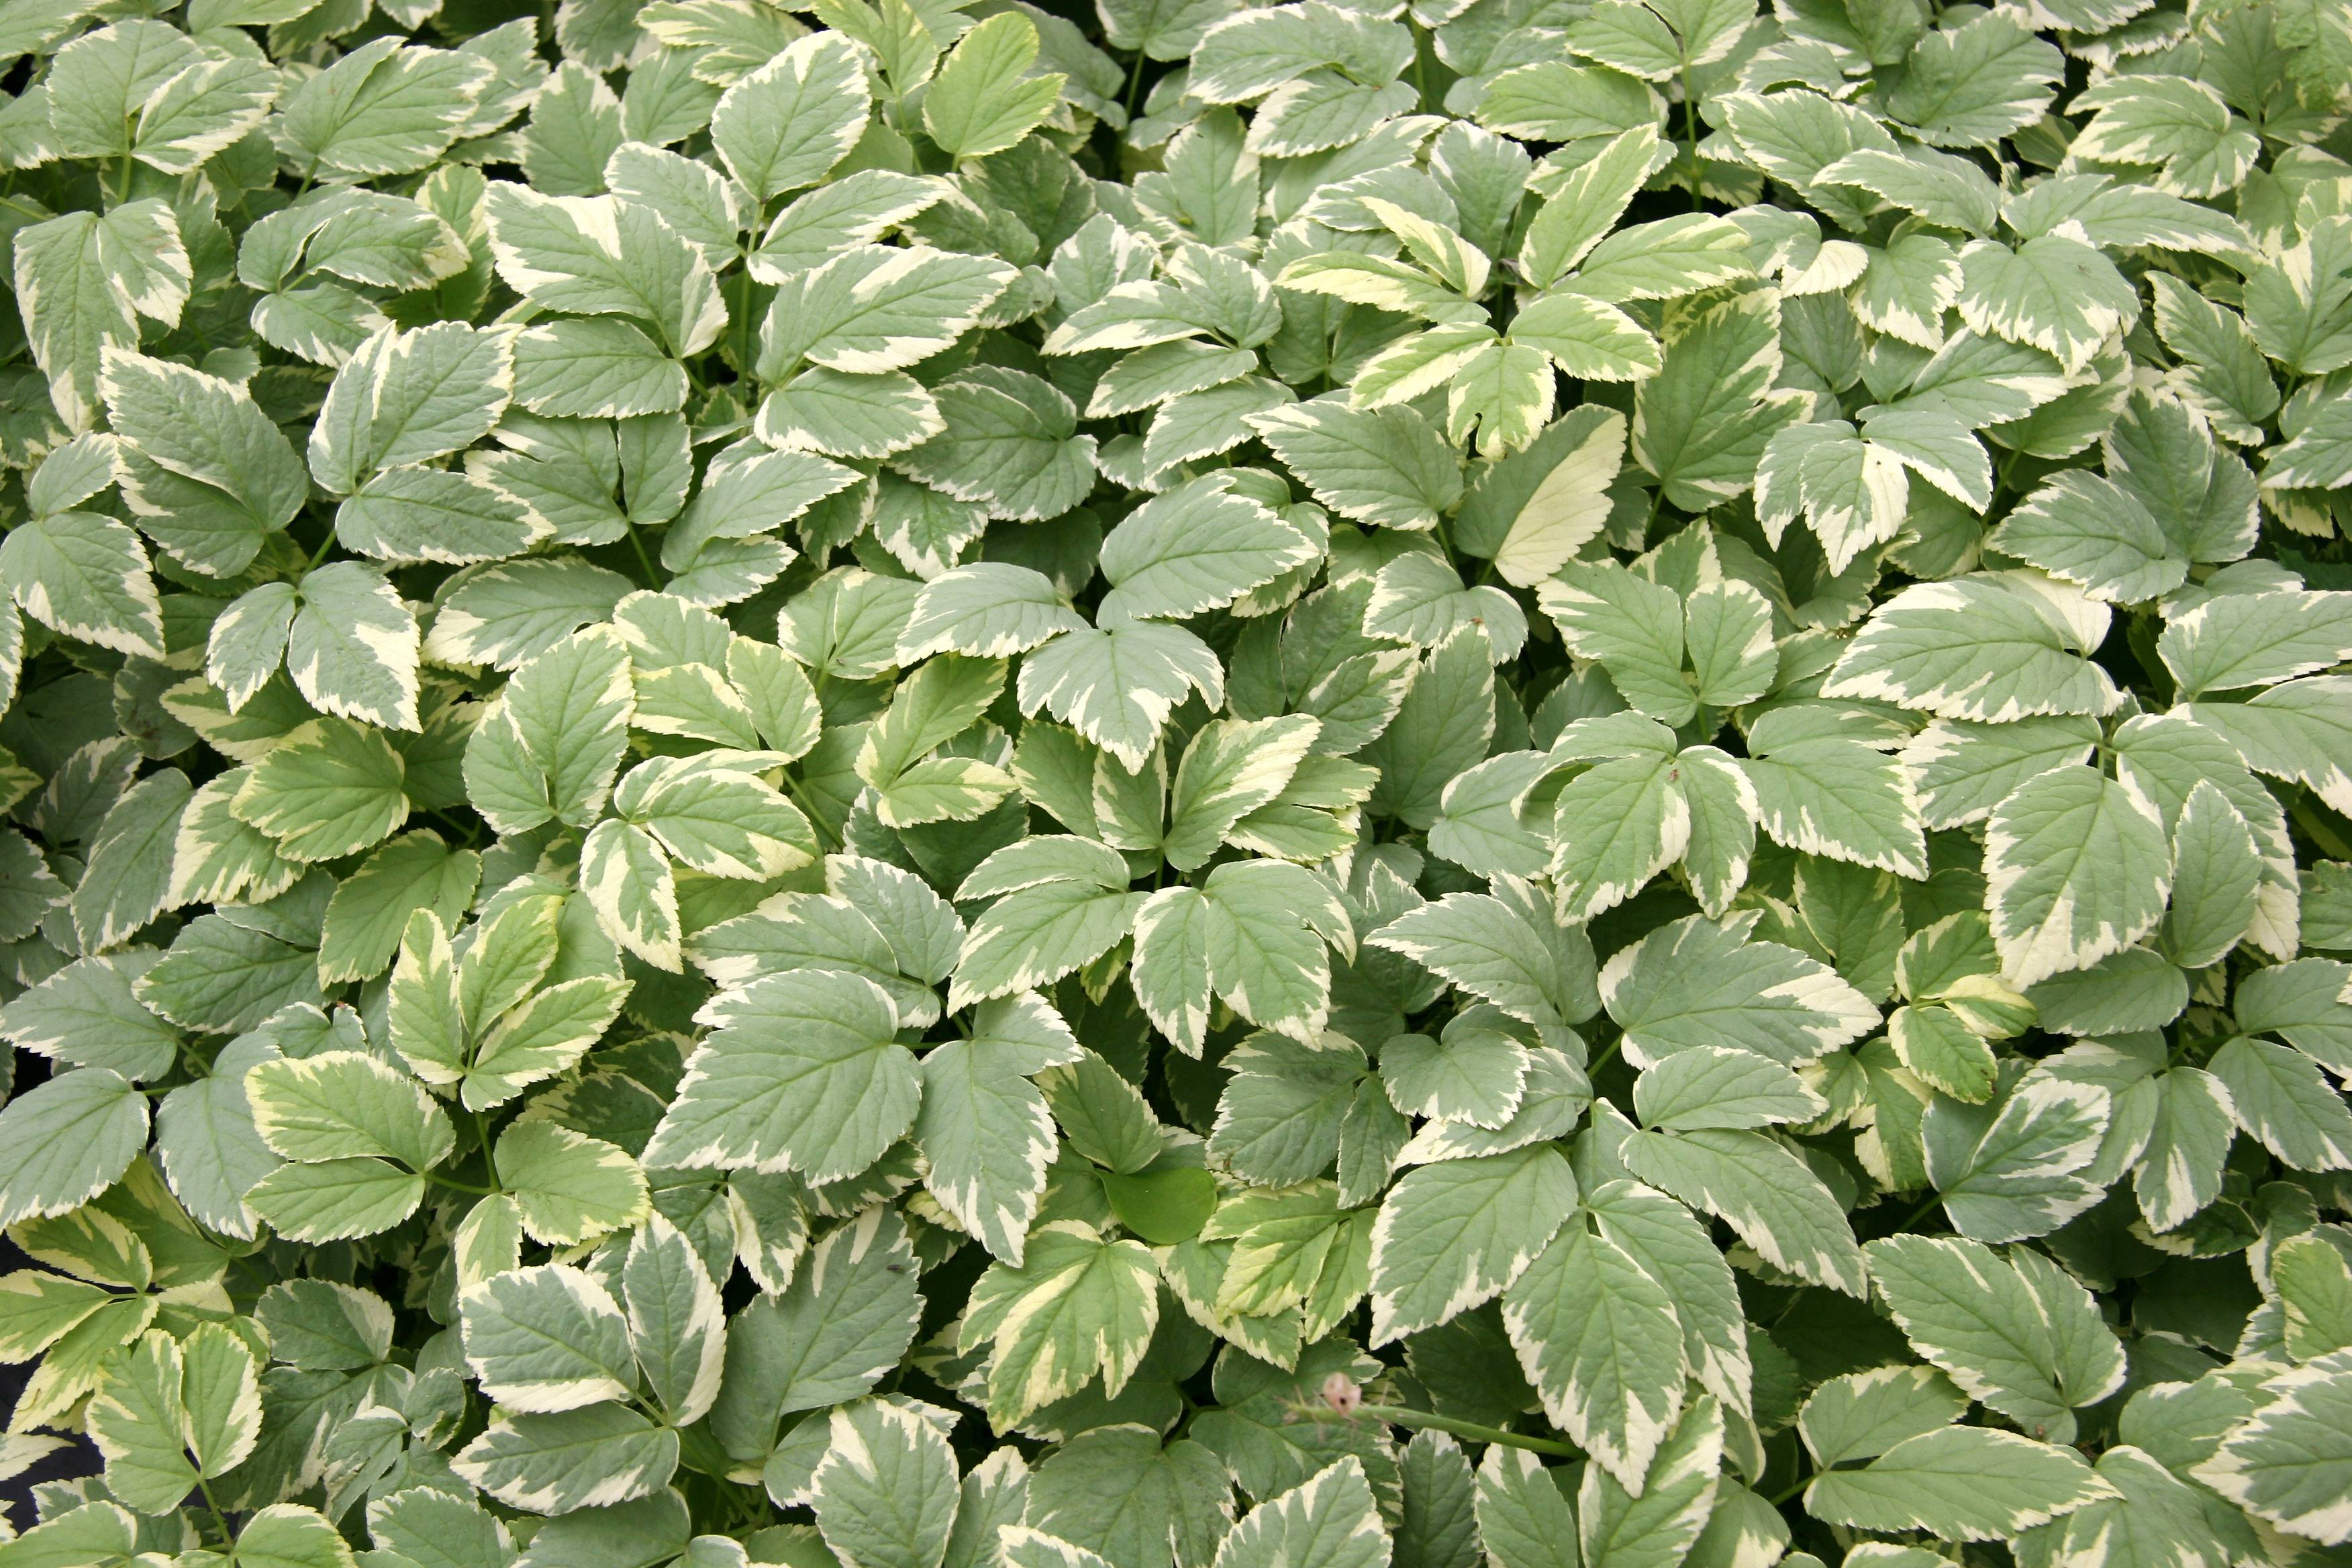 Ground Cover - Aegopodium podagraria or Bishops Weed